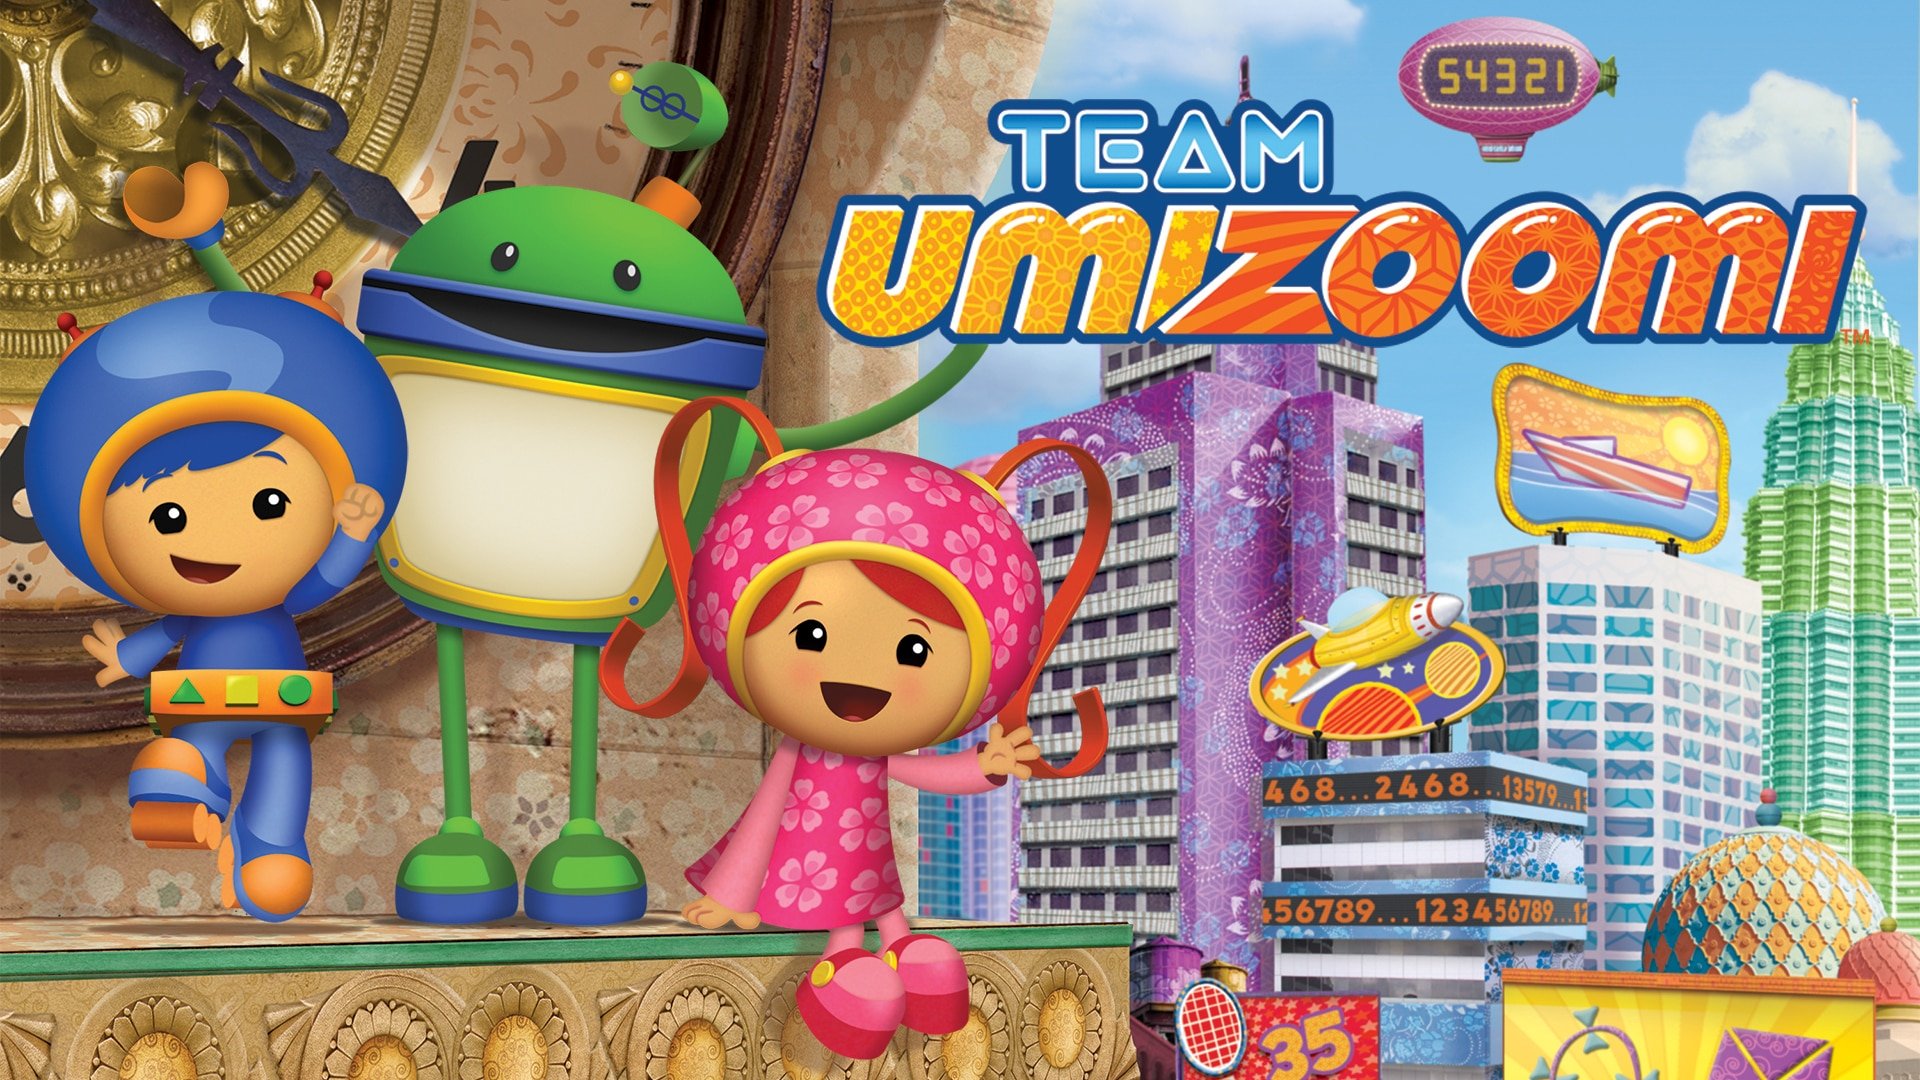 Watch Team Umizoomi Season 1 Episode 20 Online - Stream Full Episodes